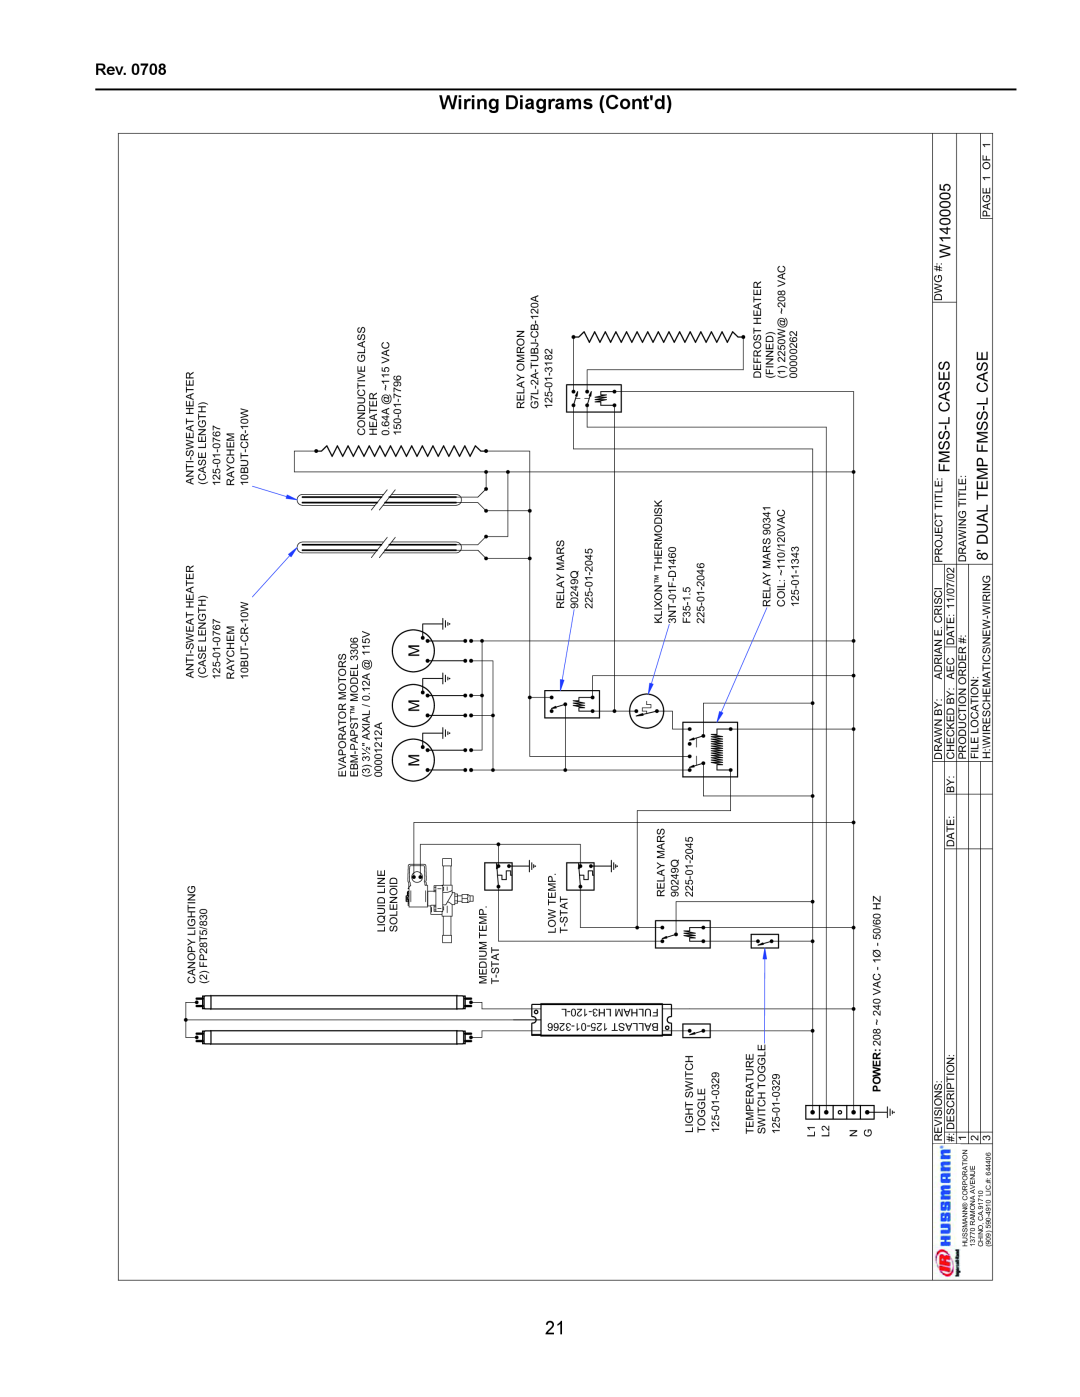 hussman FMSS-L operation manual Diagrams Contd, Wiring 